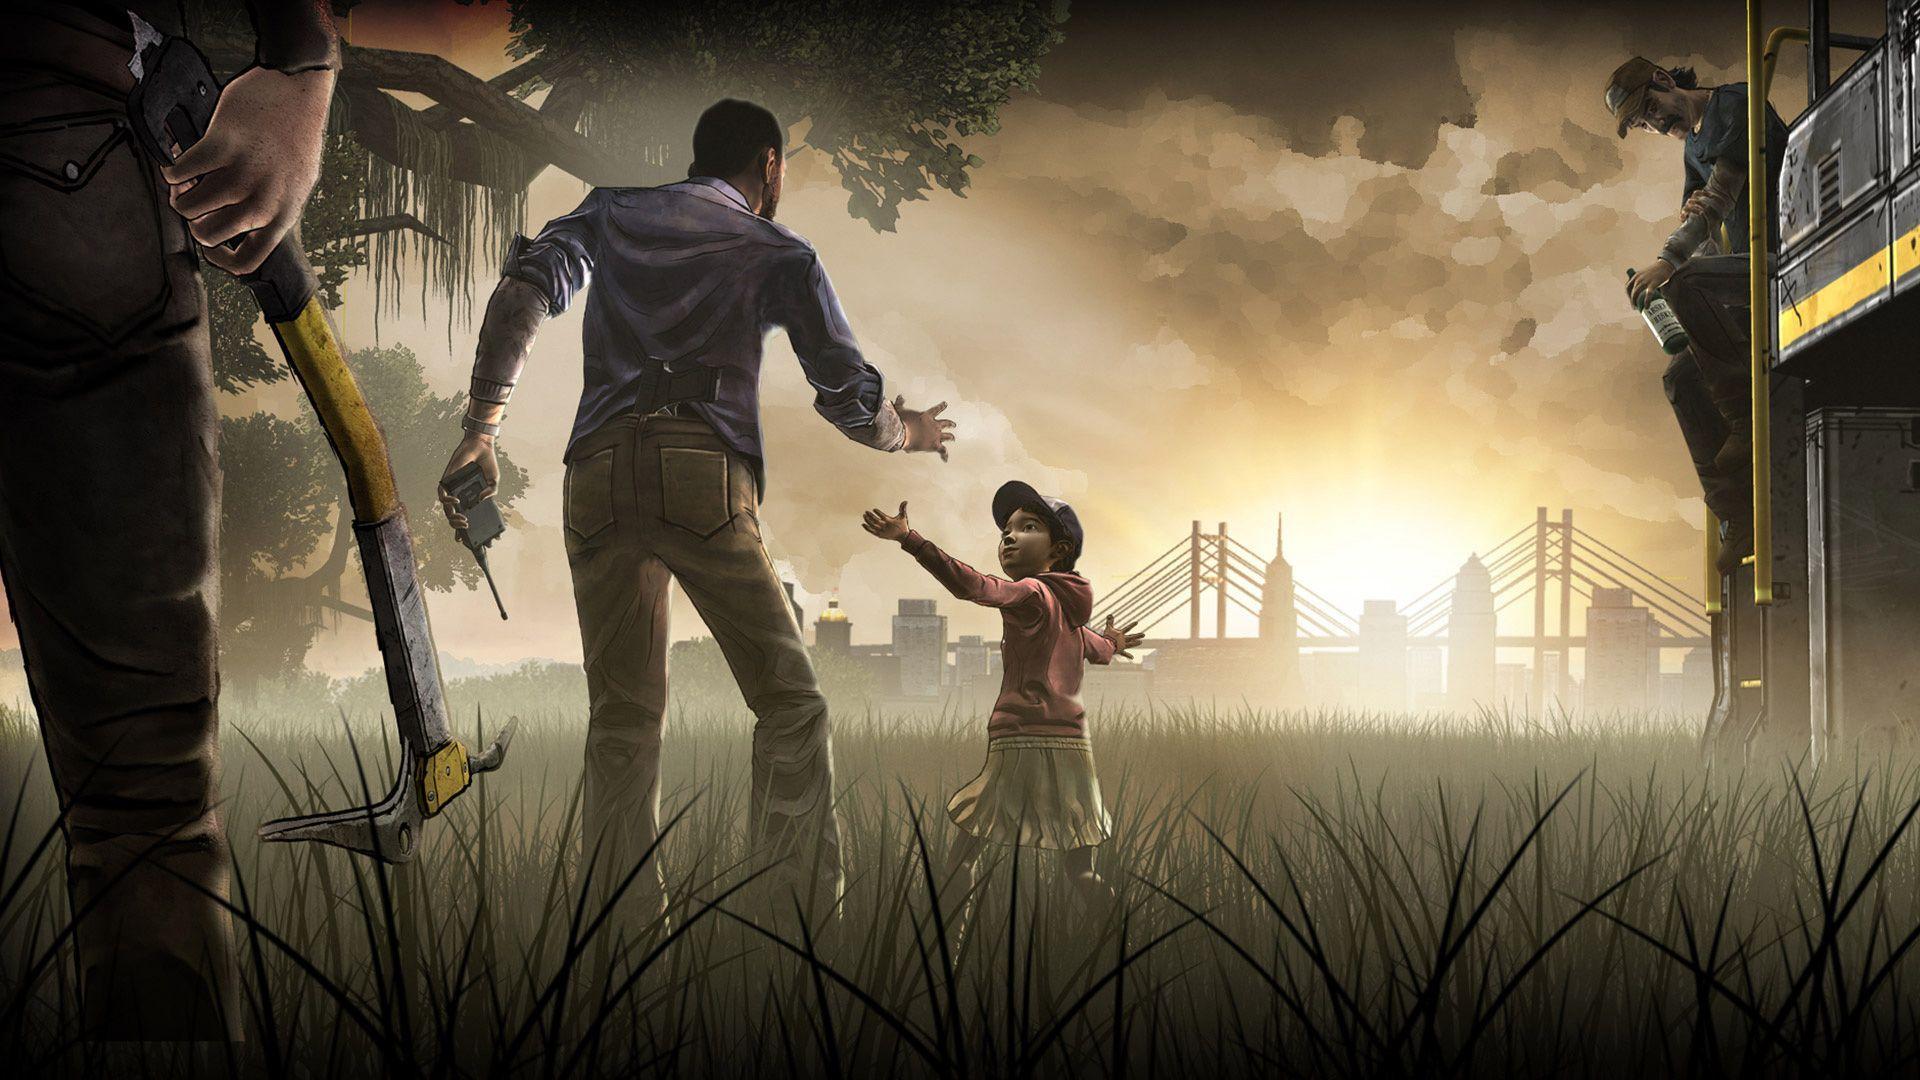 image For > The Walking Dead Season 1 Game Wallpaper